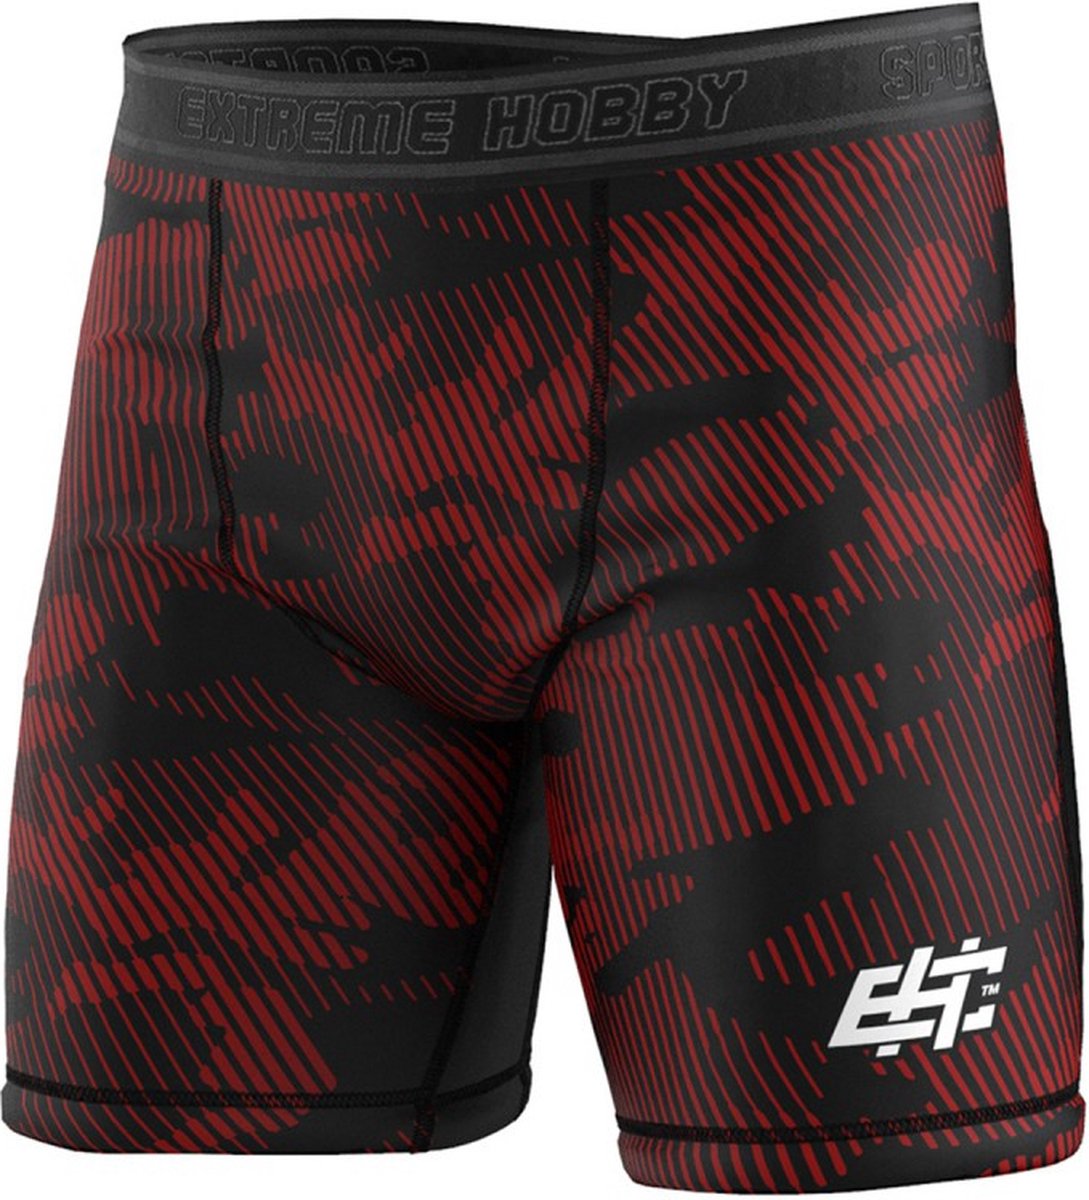 Extreme Hobby - Havoc Red - Vale Tudo Shorts - Compression Shorts - Rood, Zwaart - Maat XXL